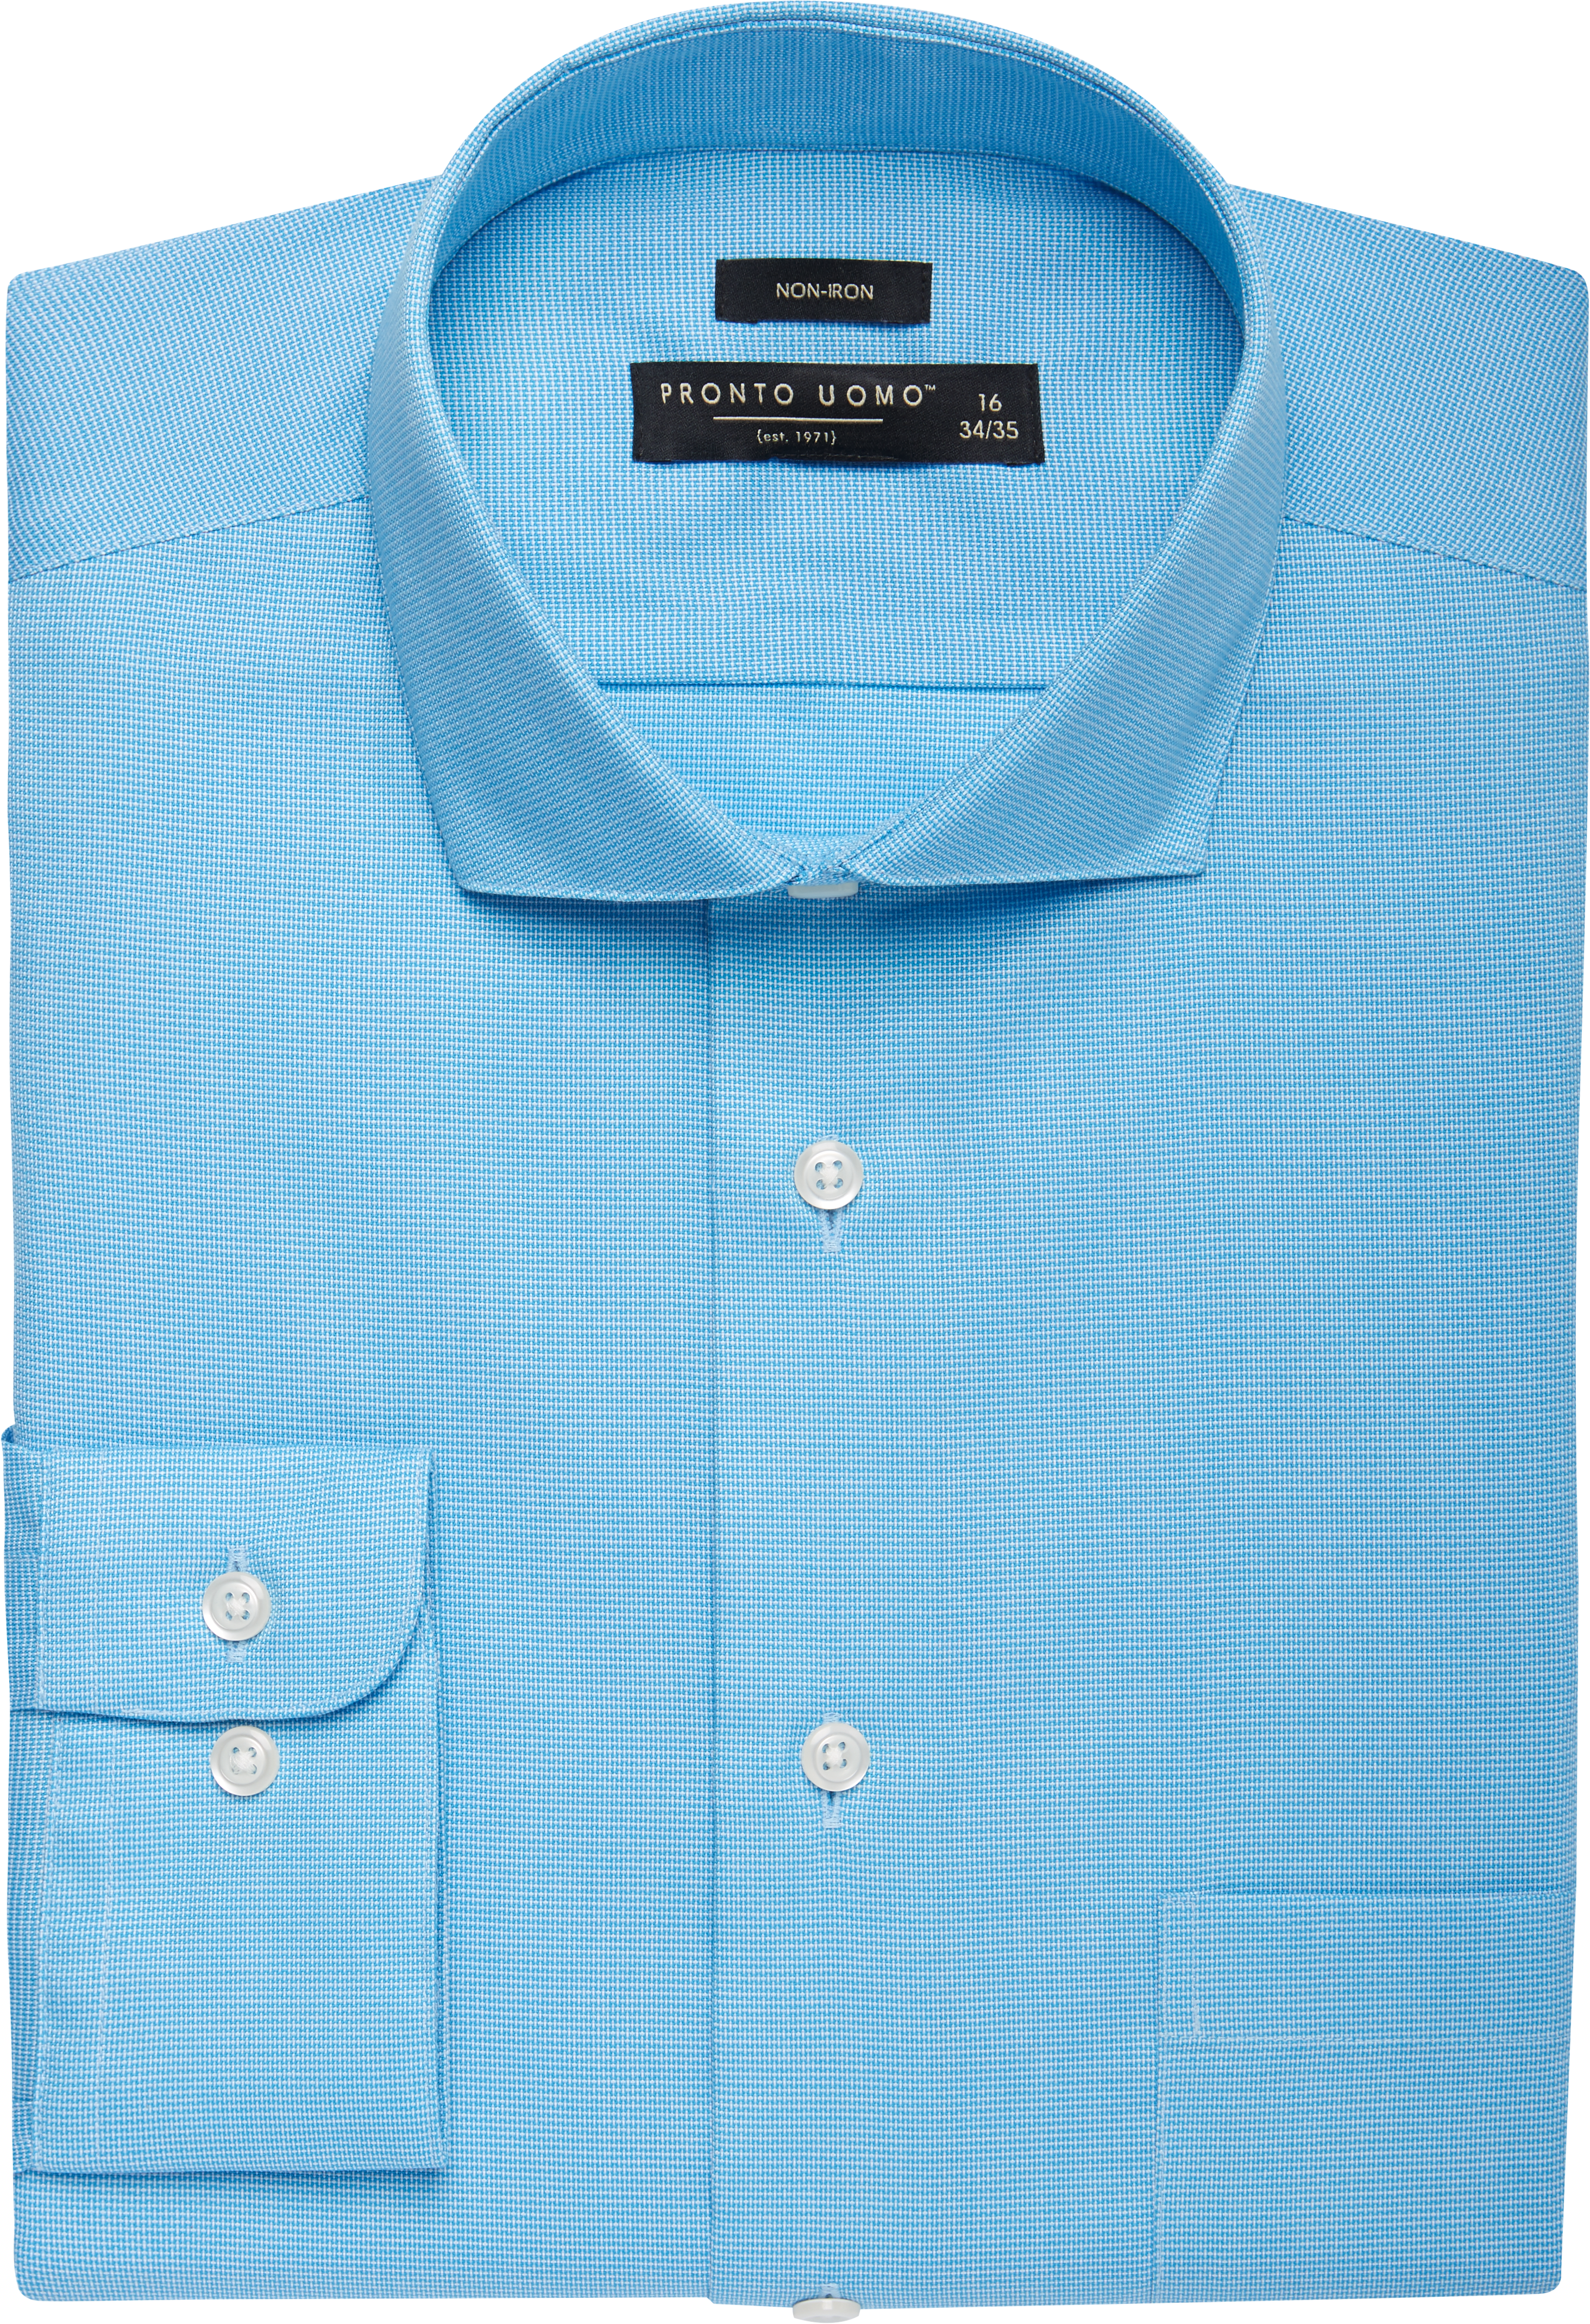 Pronto Uomo Ocean Blue Dress Shirt - Men's Sale | Men's Wearhouse